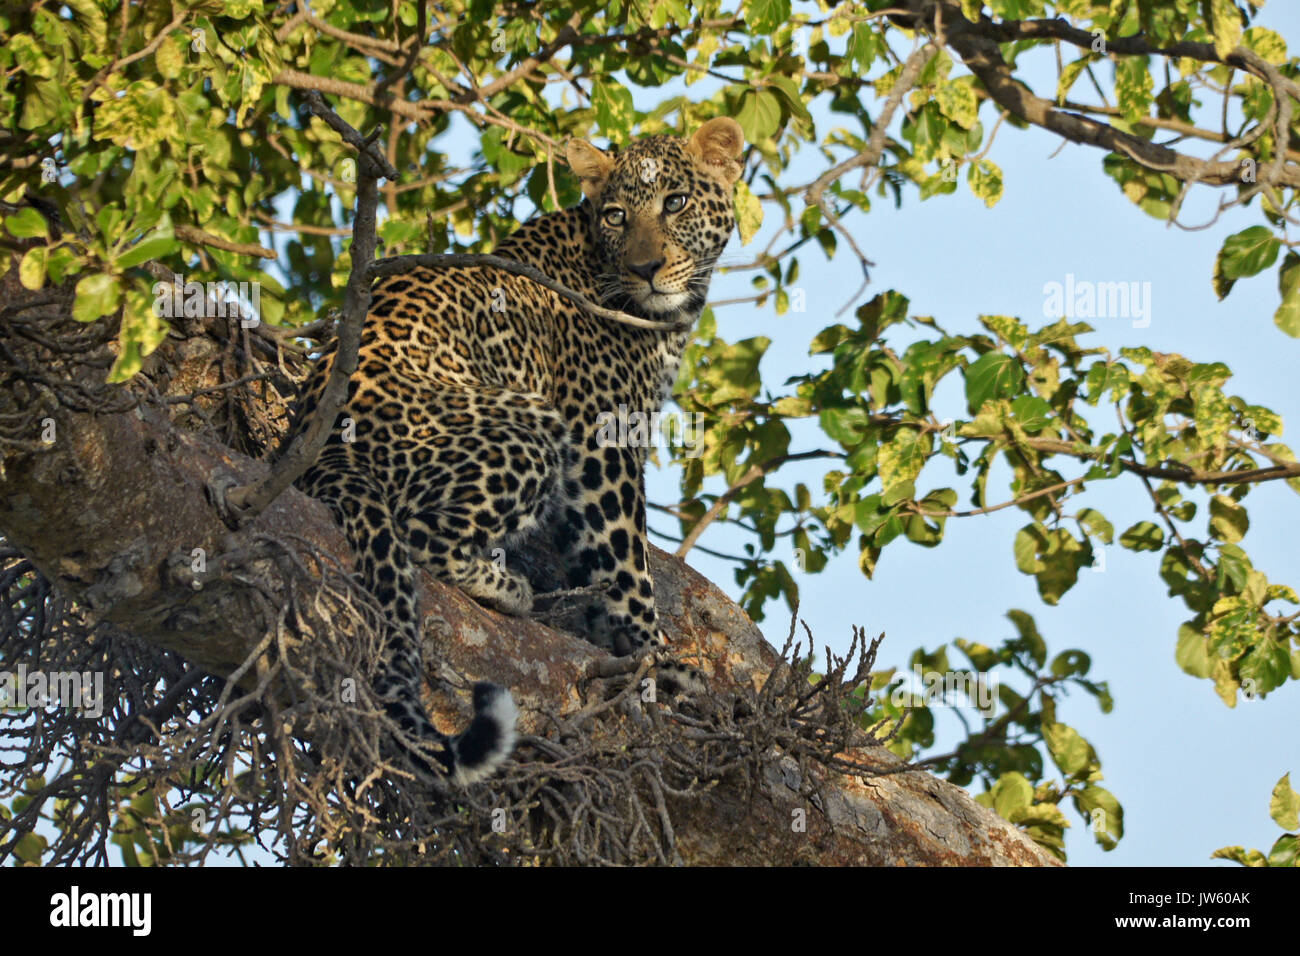 Giovane maschio leopard seduta nella struttura ad albero, il Masai Mara Game Reserve, Kenya Foto Stock